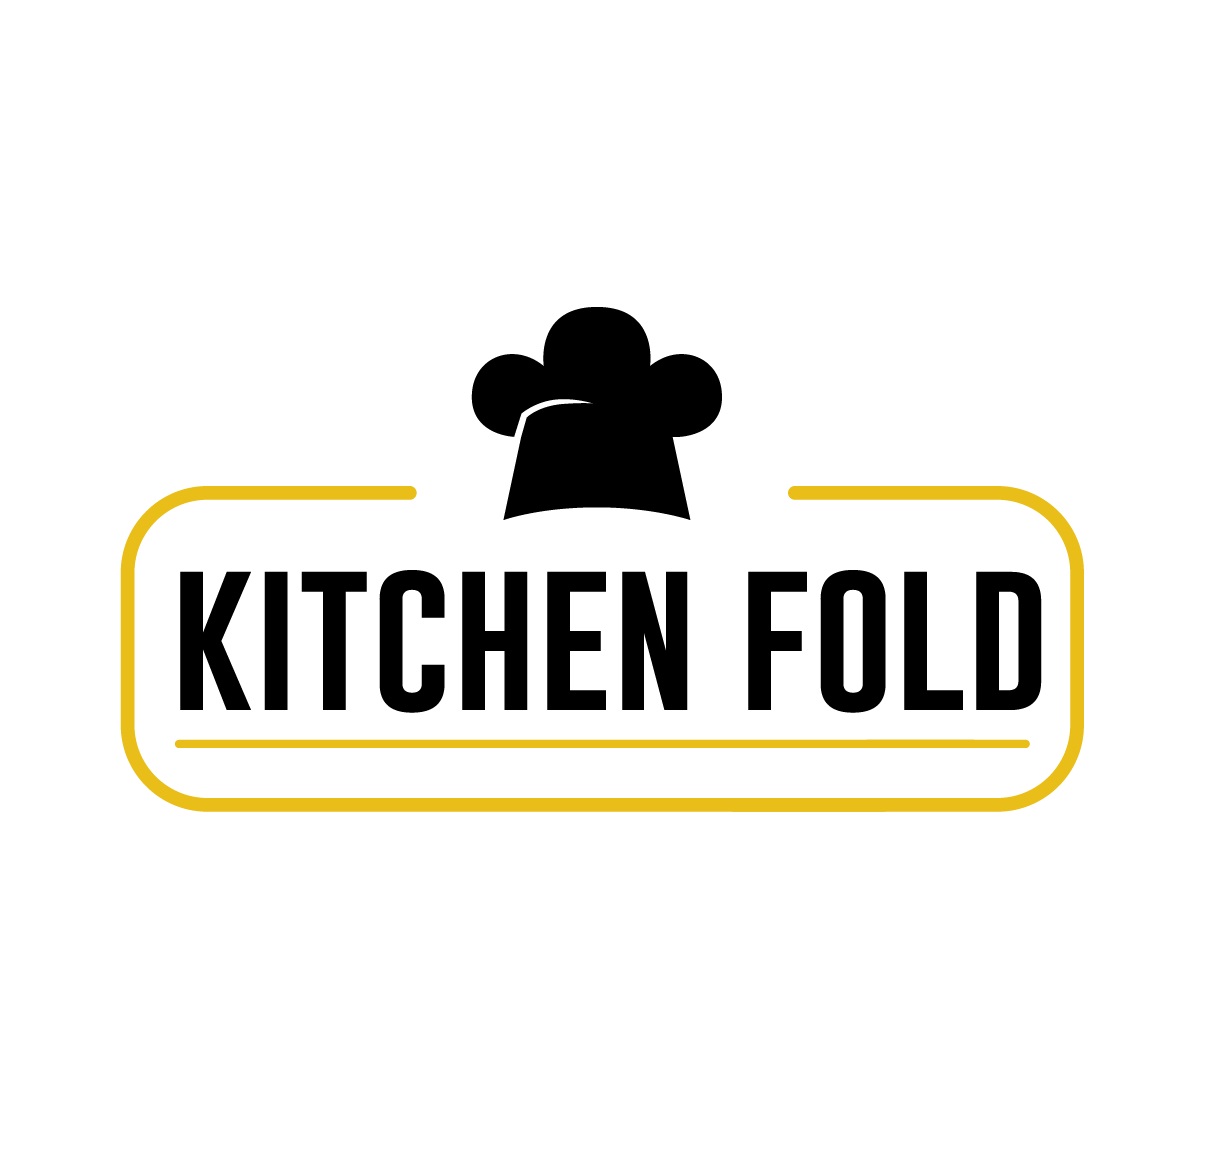  KitchenFold